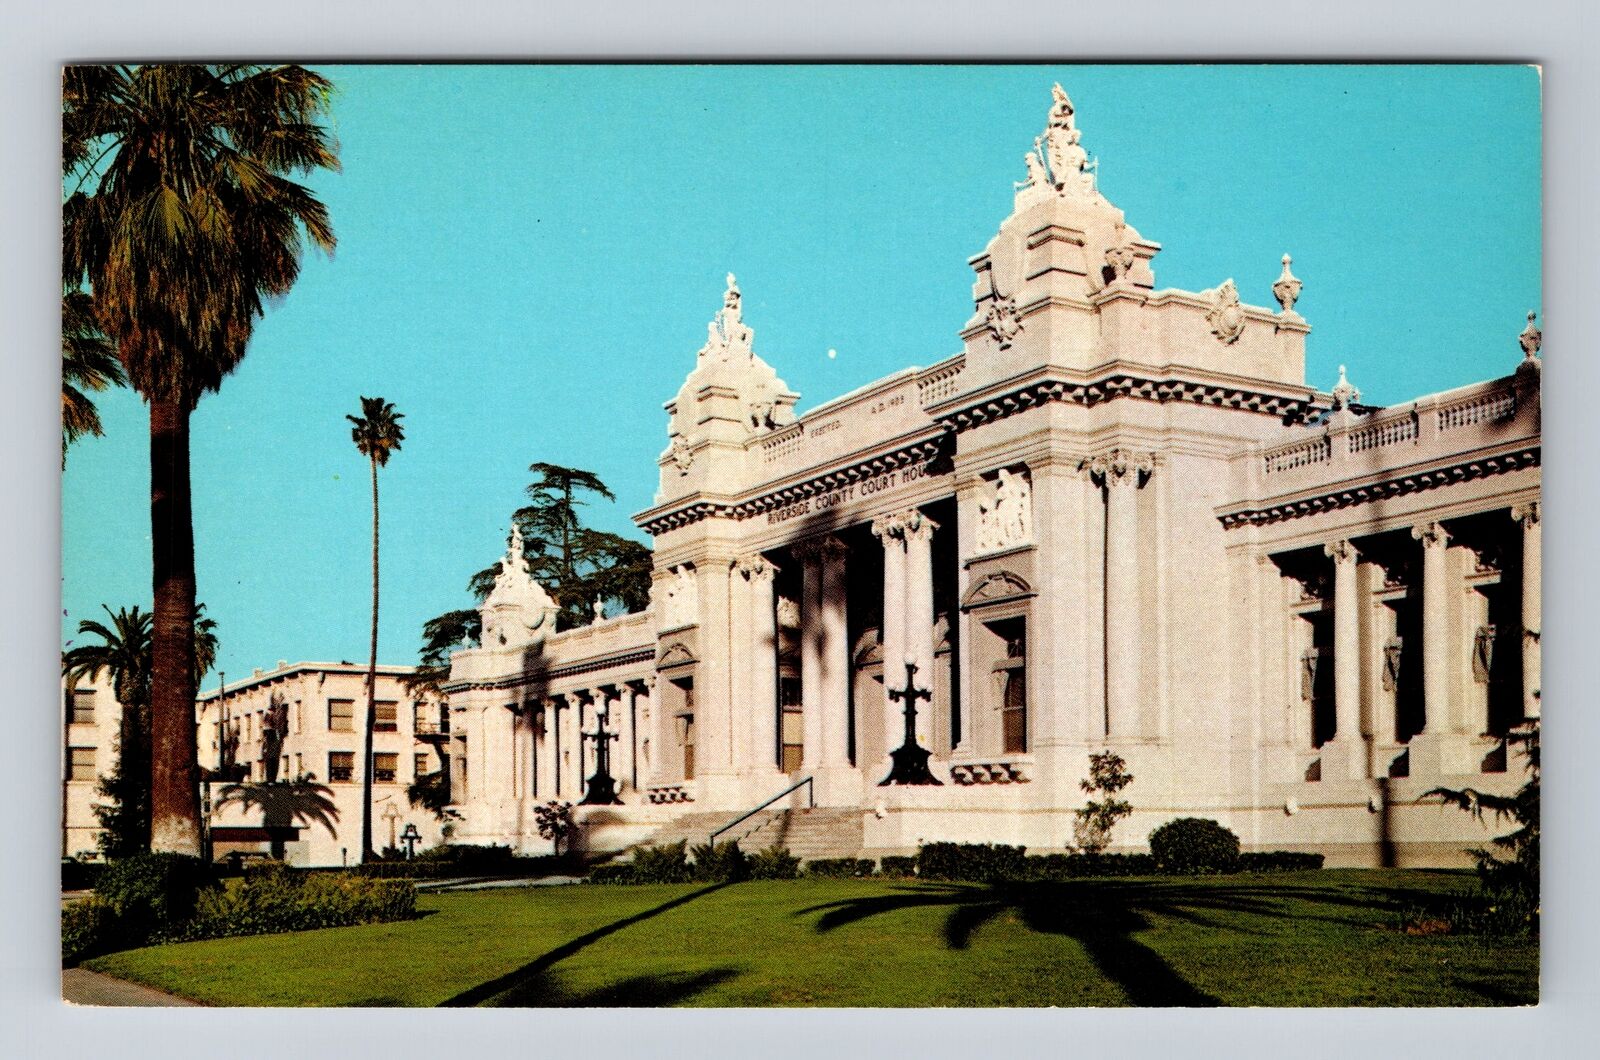 Riverside CA-California, Riverside County Court House, Vintage Postcard